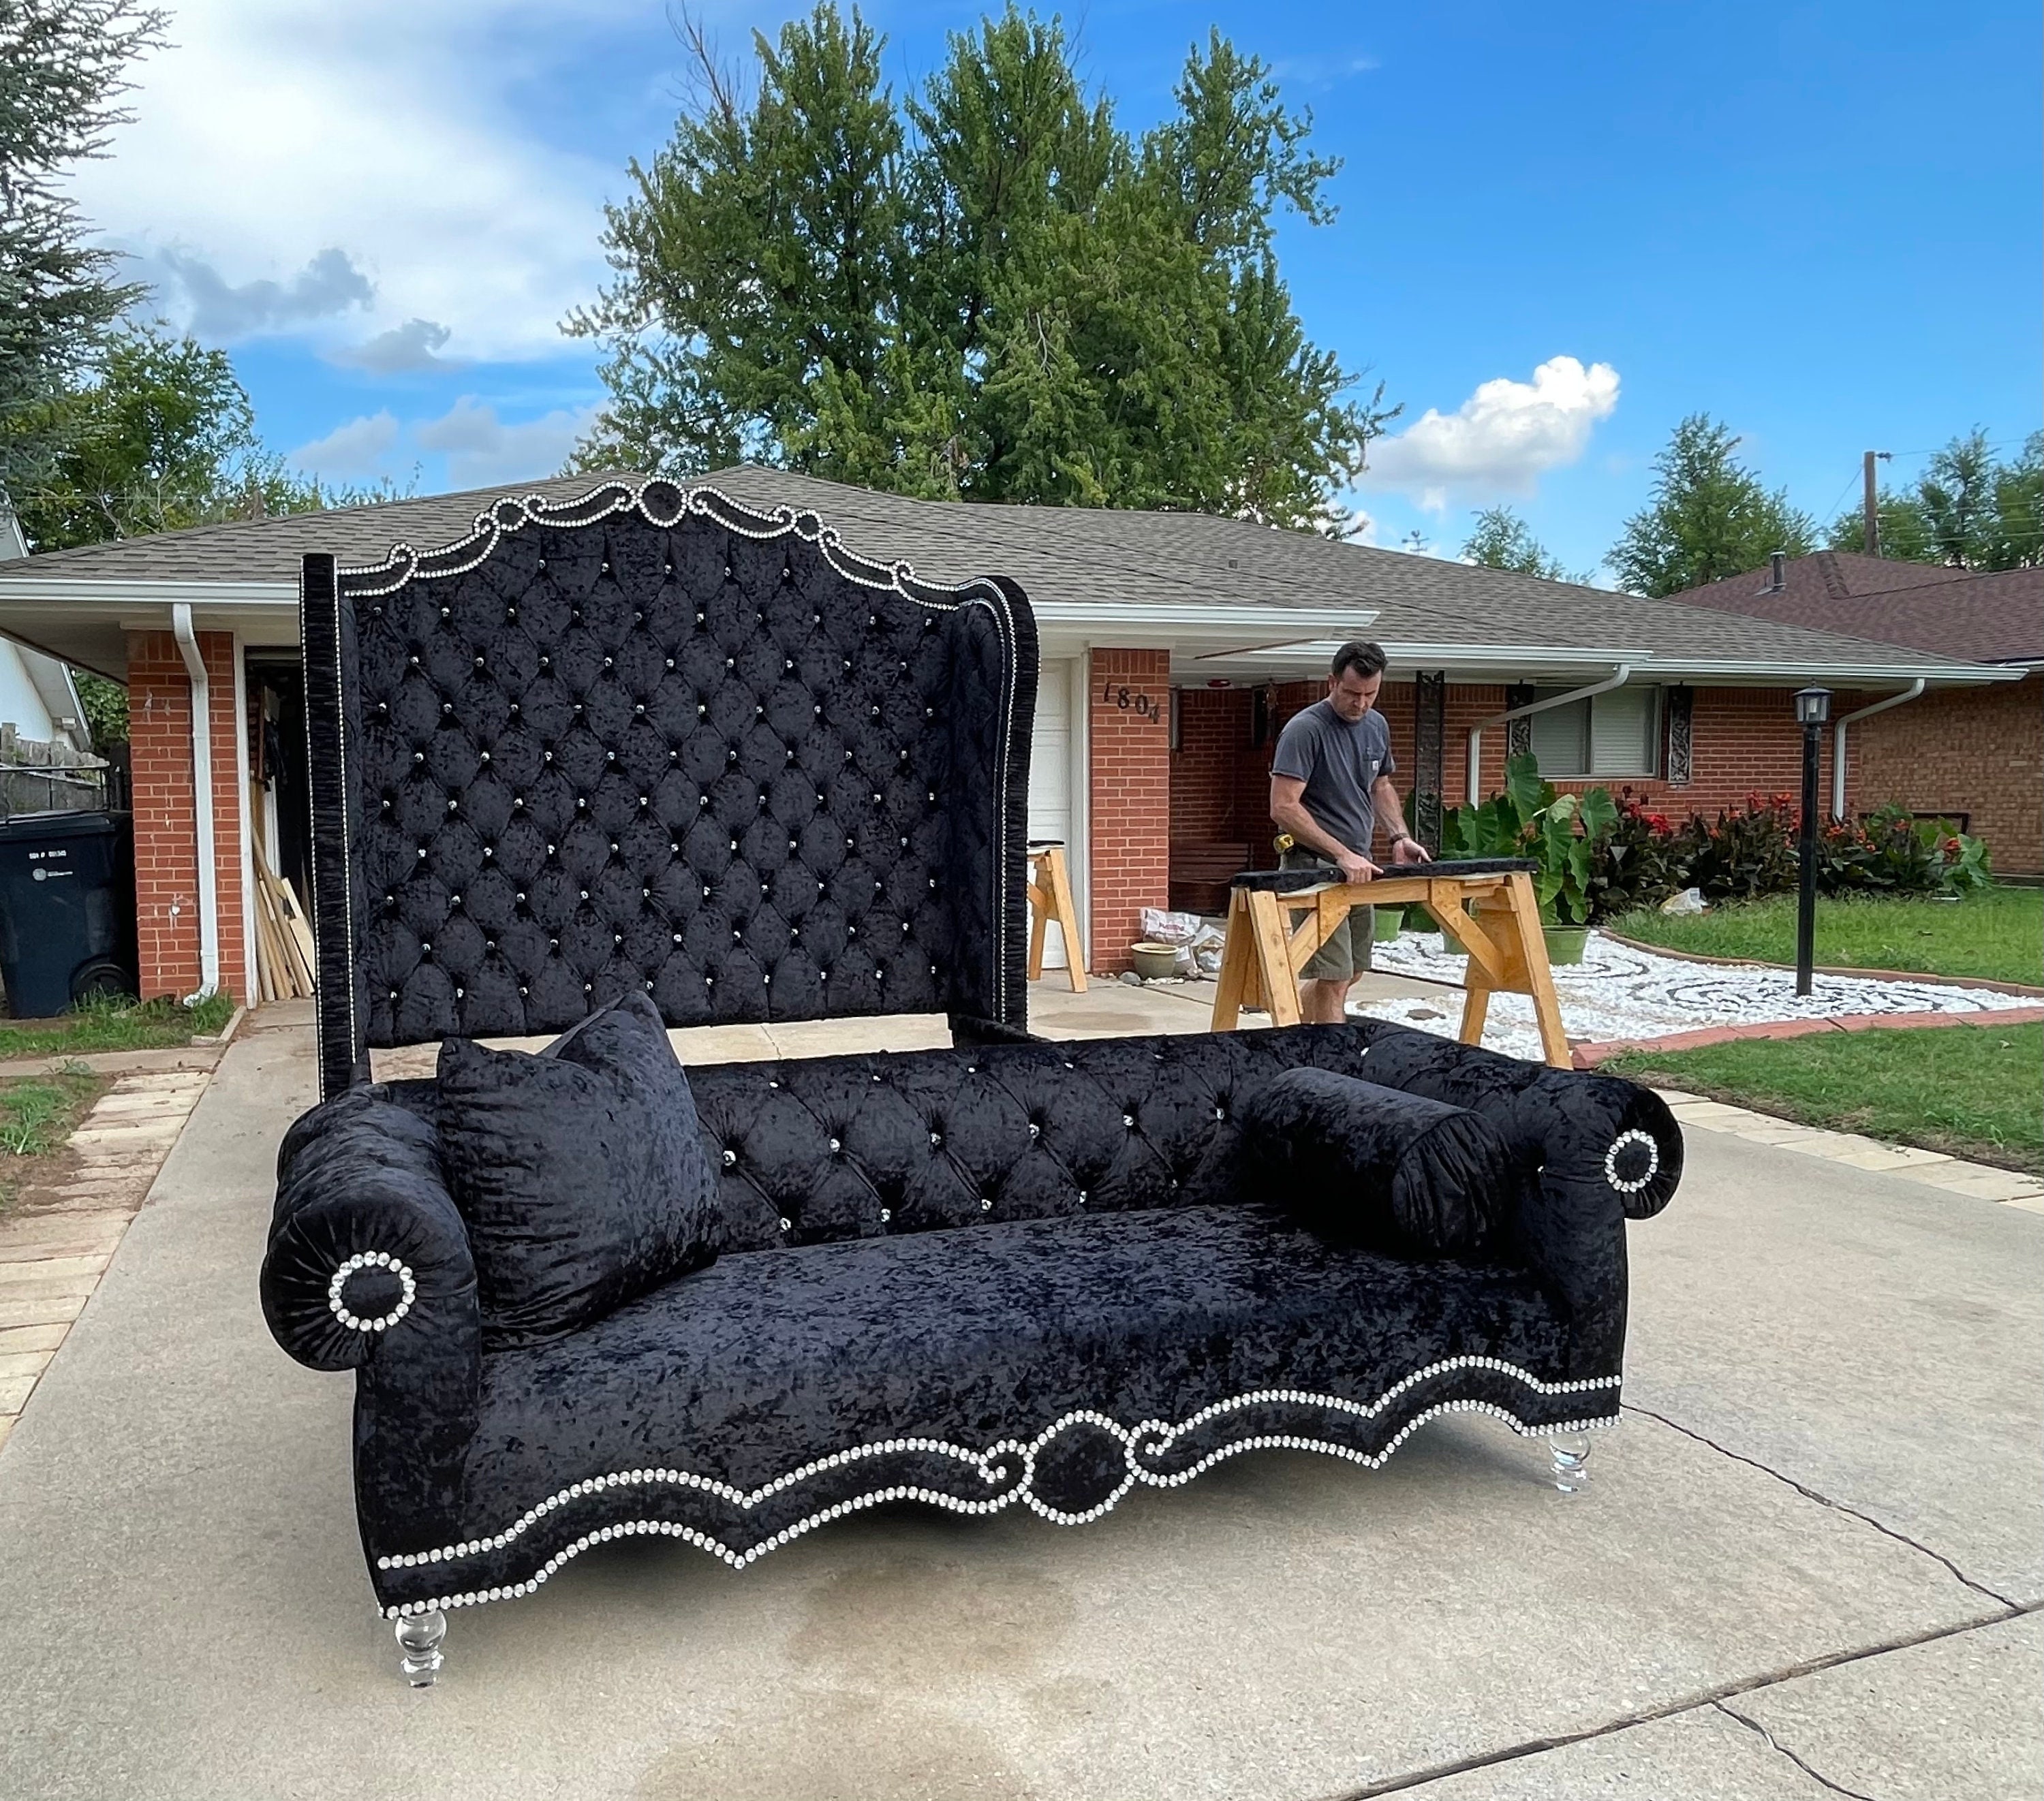 Gothic Sofa, Custom Upholstered Sofas